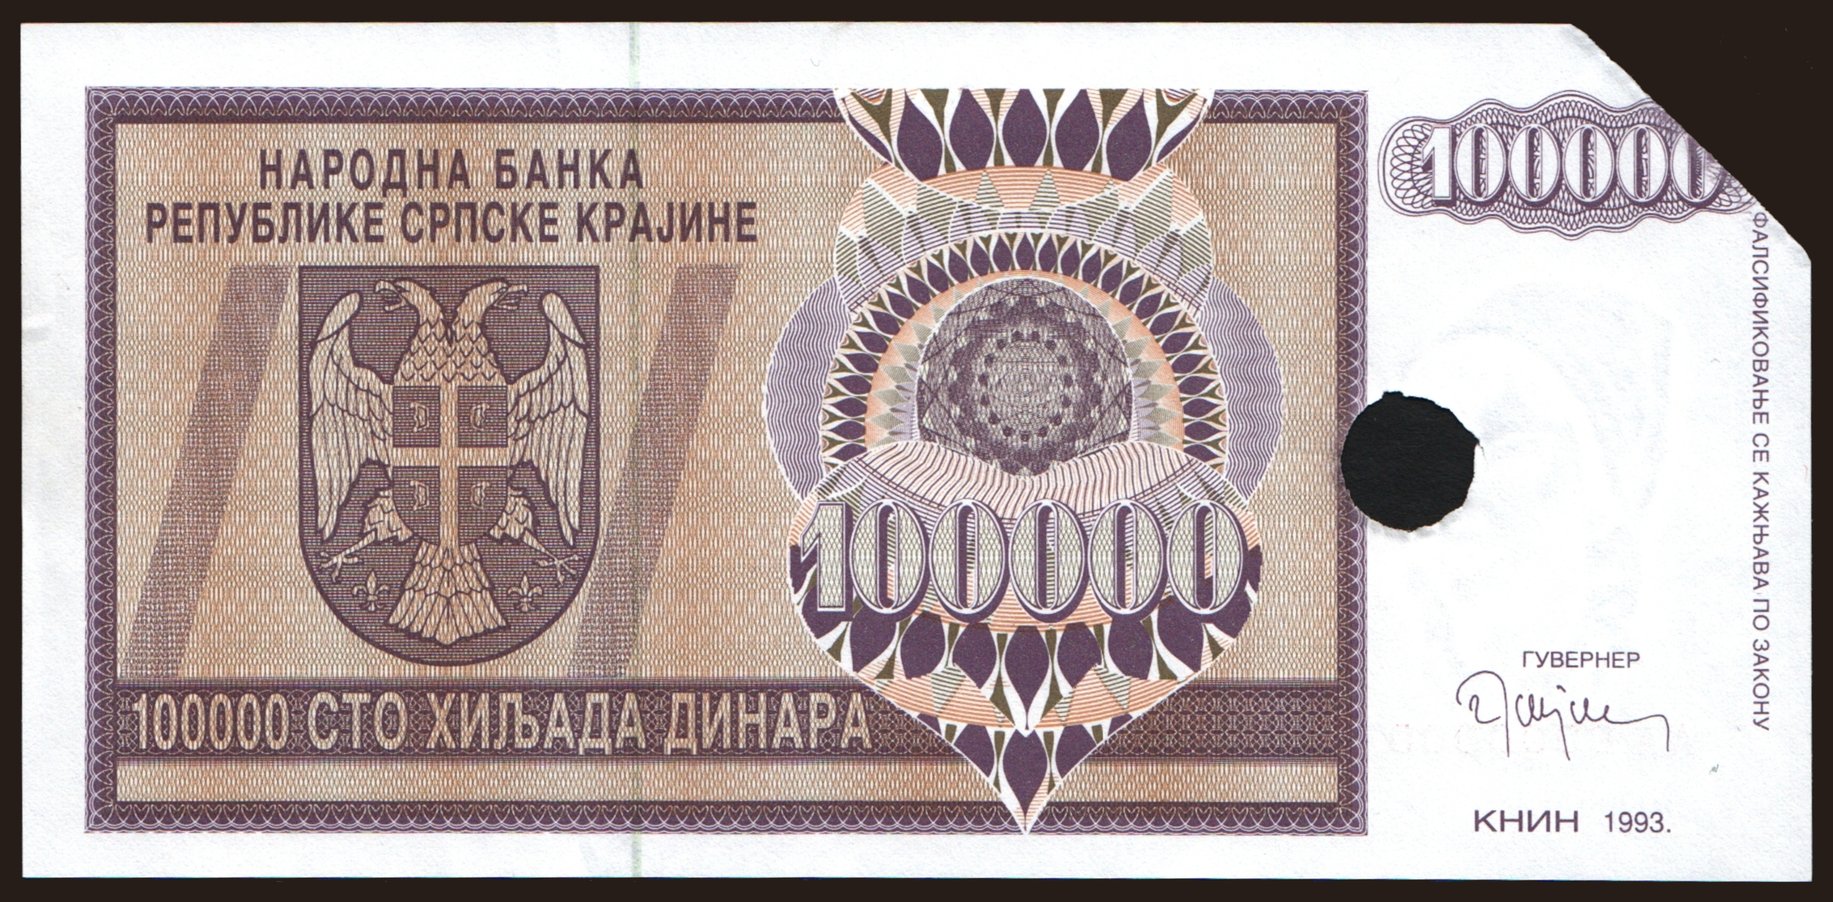 RSK, 100.000 dinara, 1993